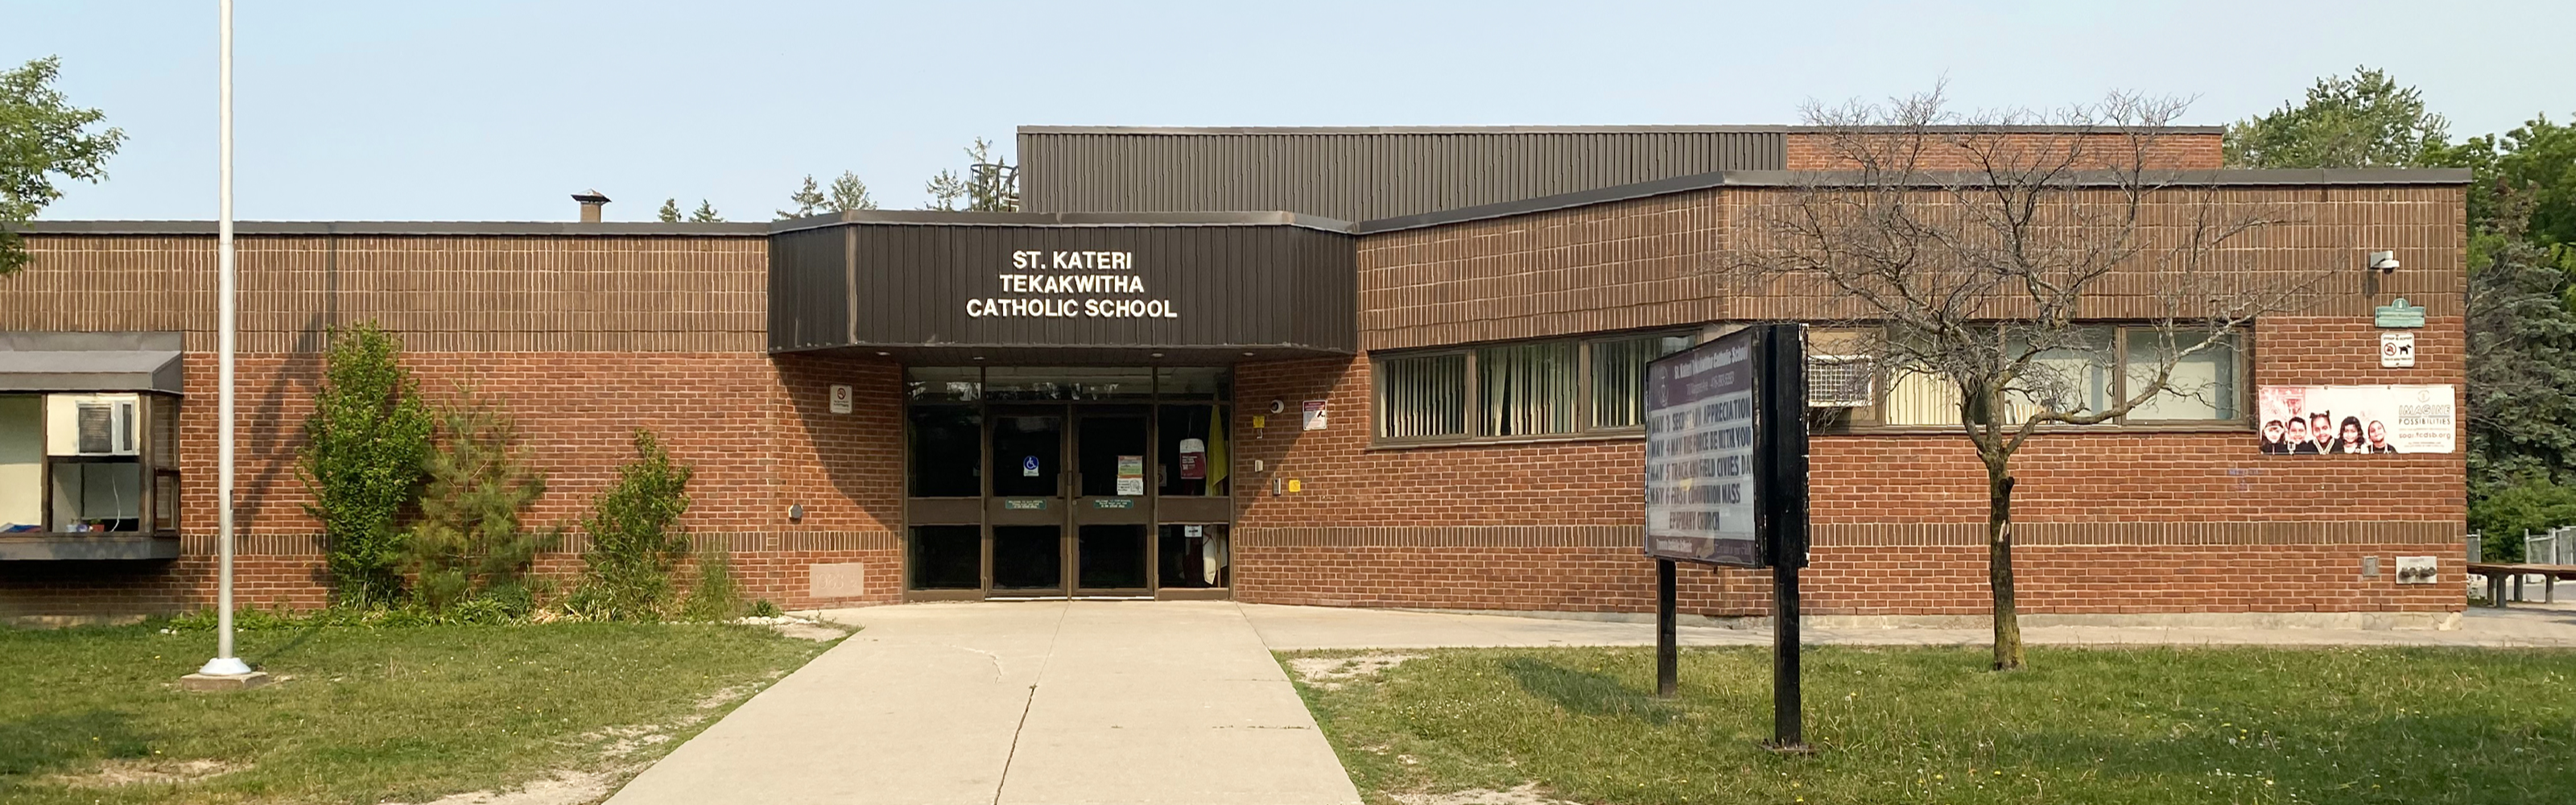 The front of the St. Kateri Tekakwitha Catholic School building.